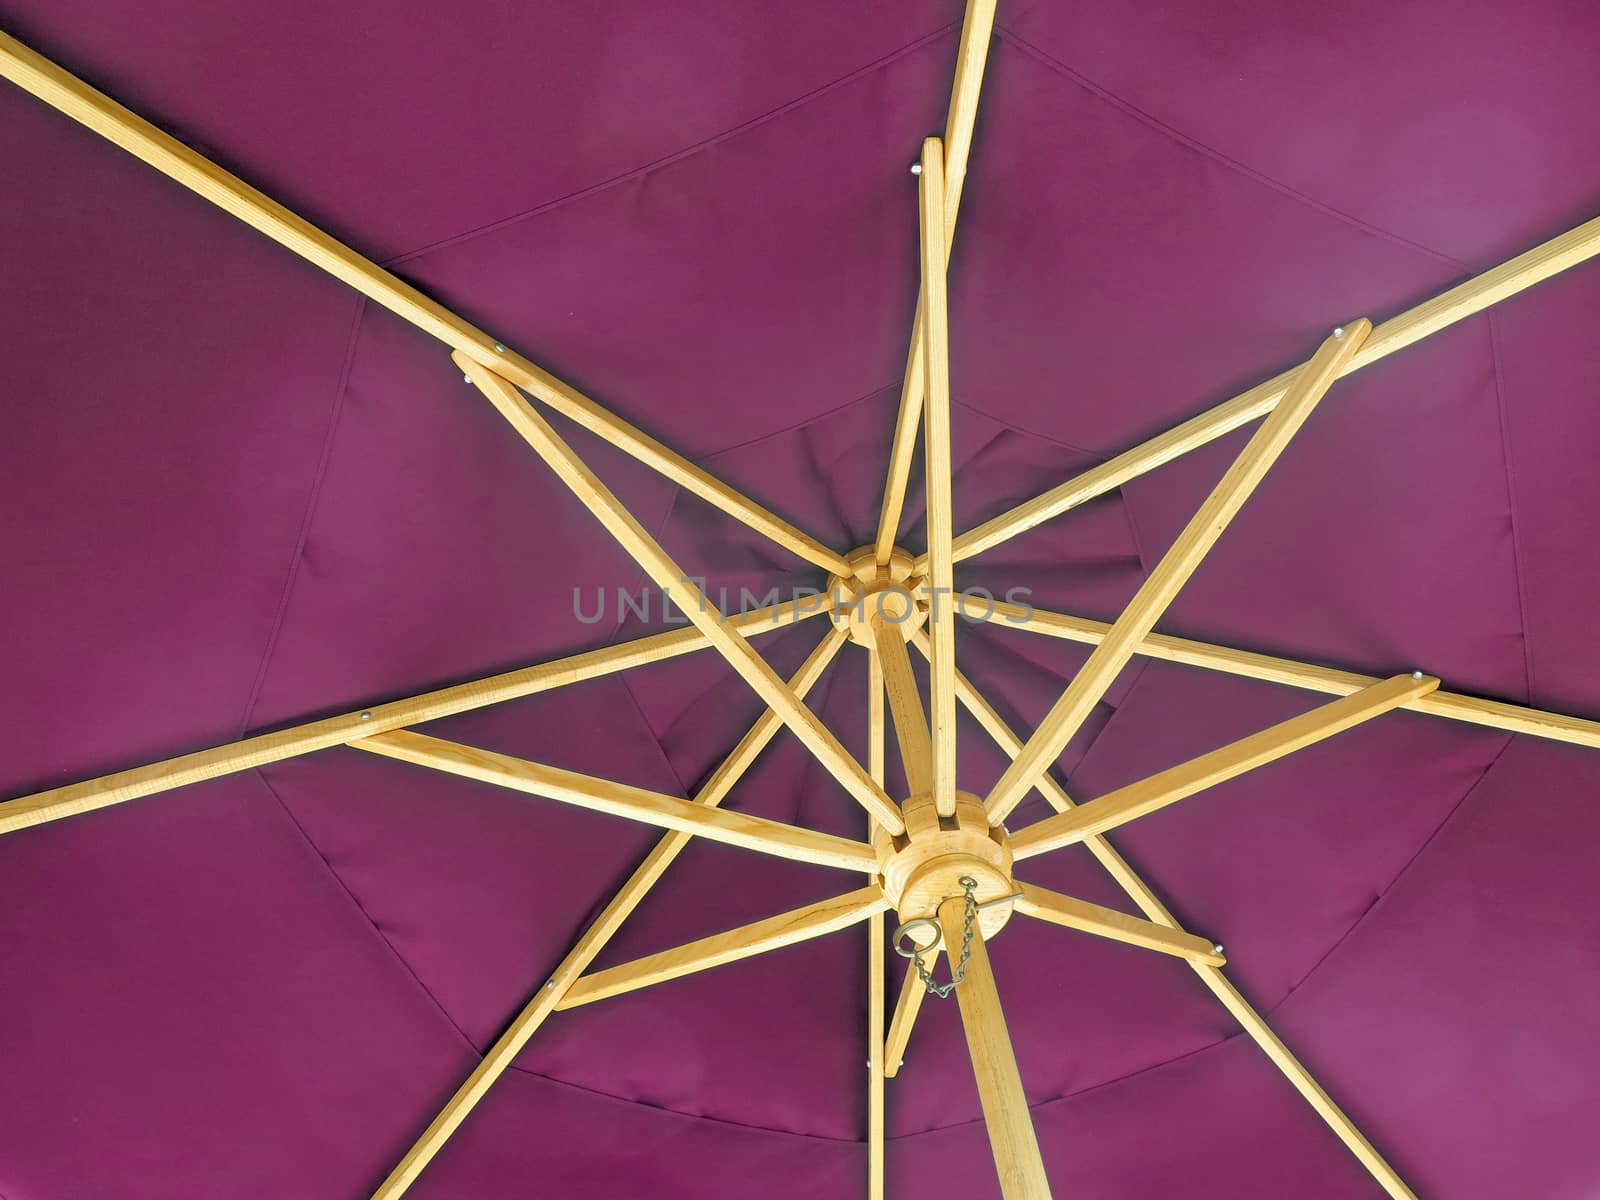 The inside of an open pink umbrella